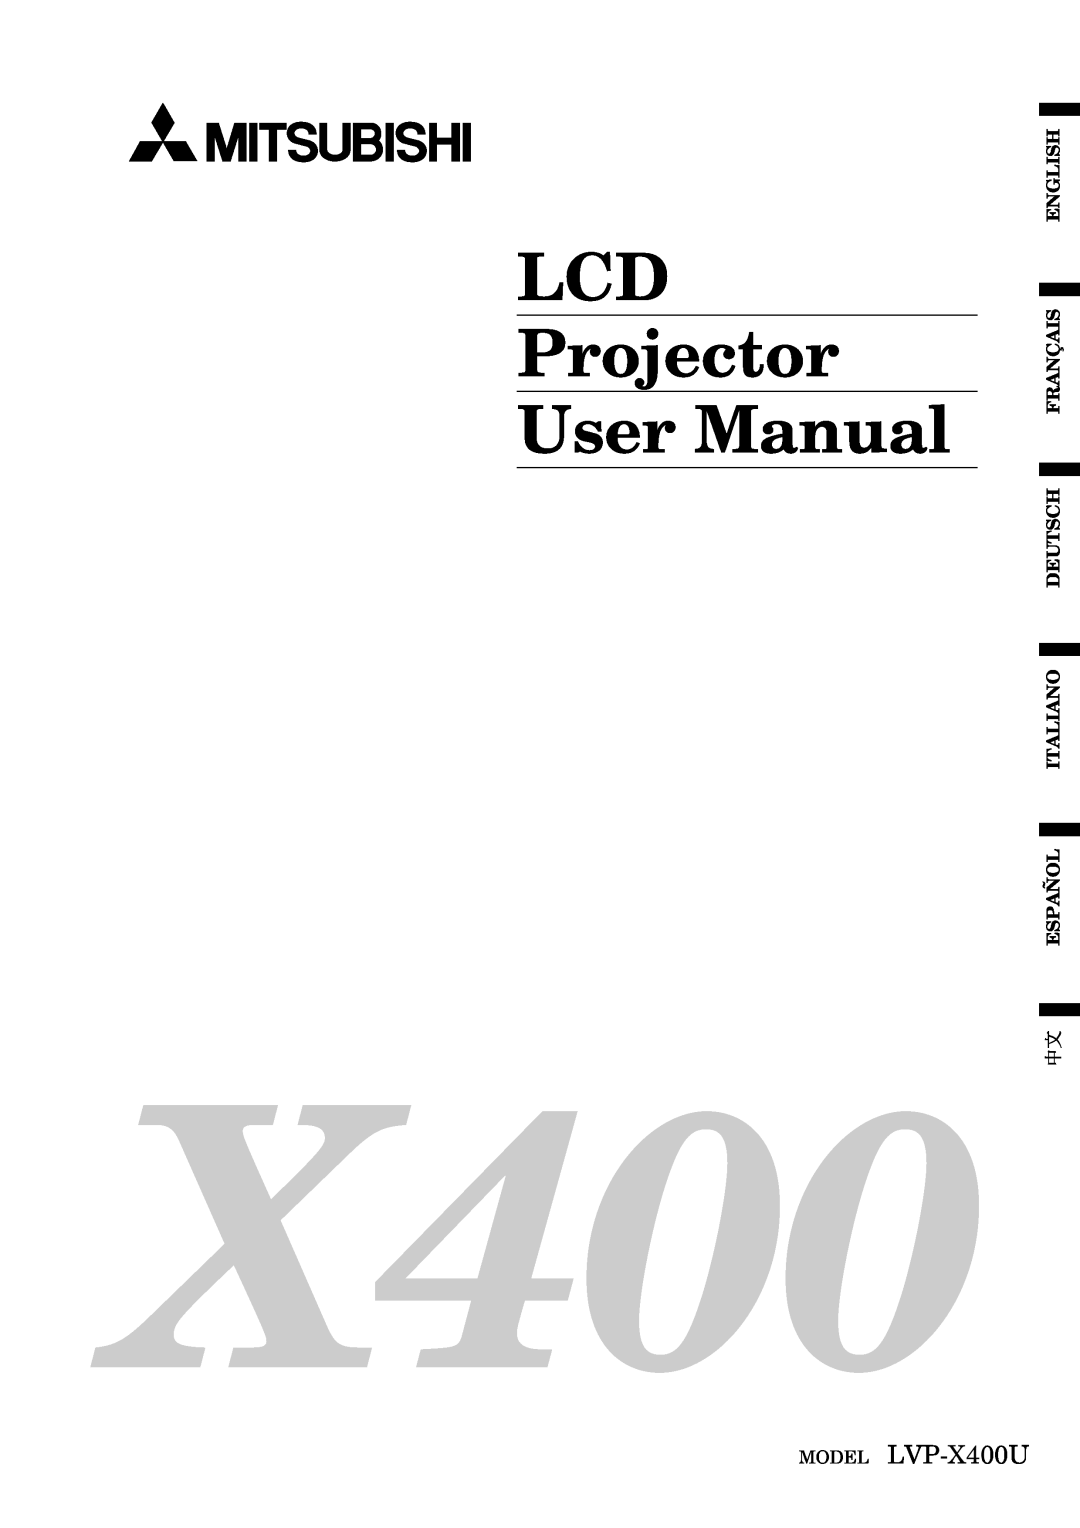 Mitsubishi Electronics user manual MODEL LVP-X400U, LCD Projector User Manual 